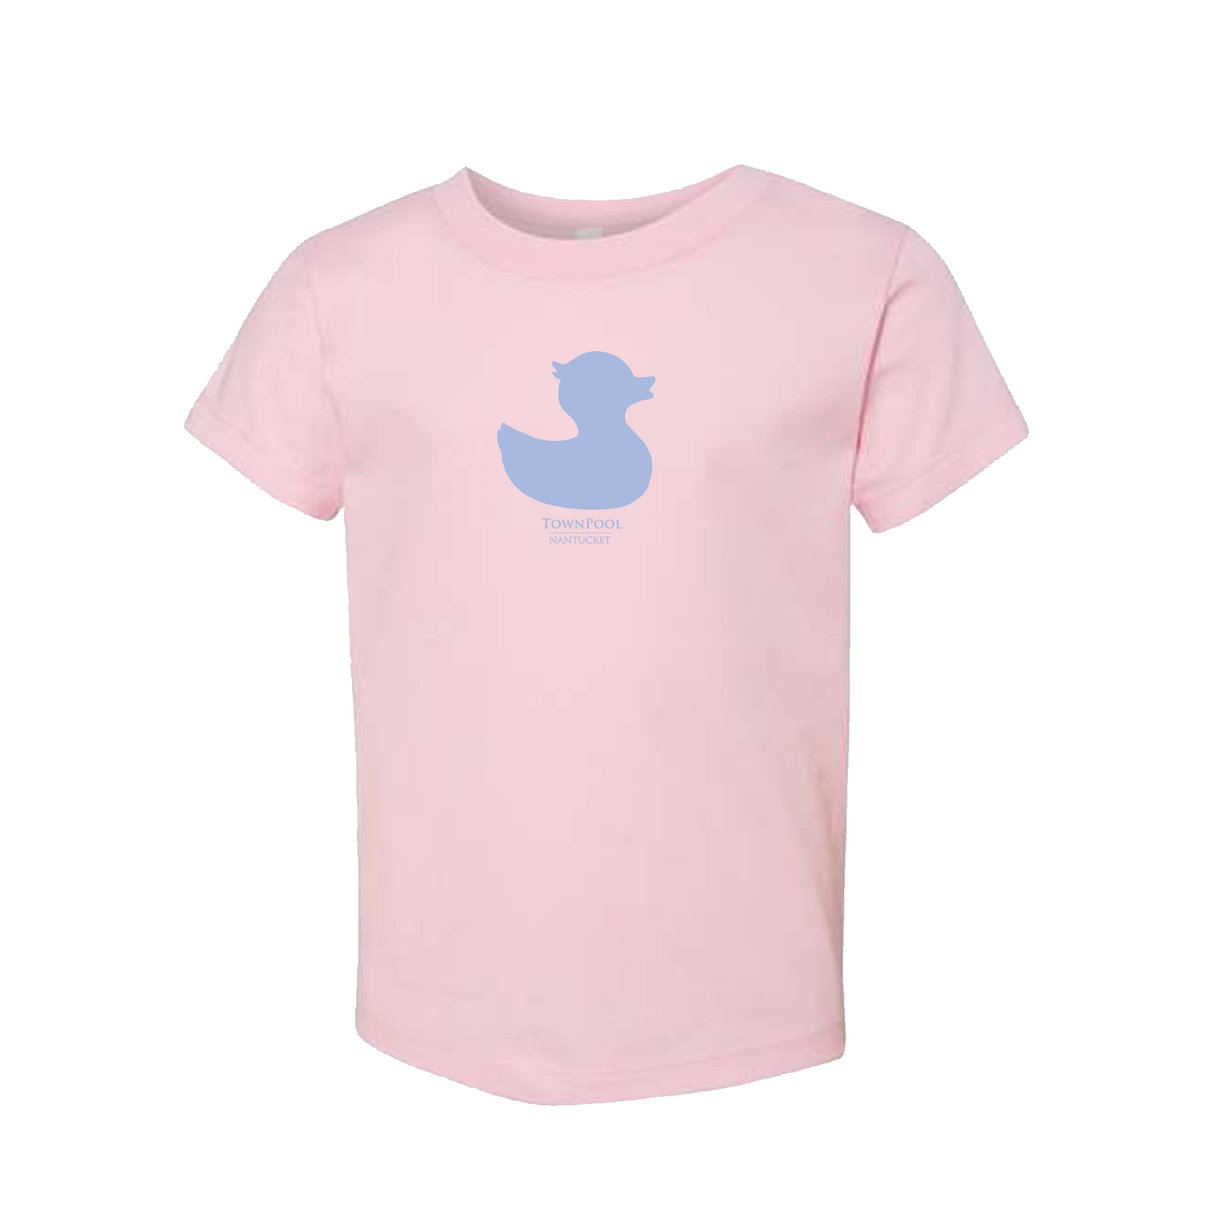 Children's Duck Pink Tee Shirt